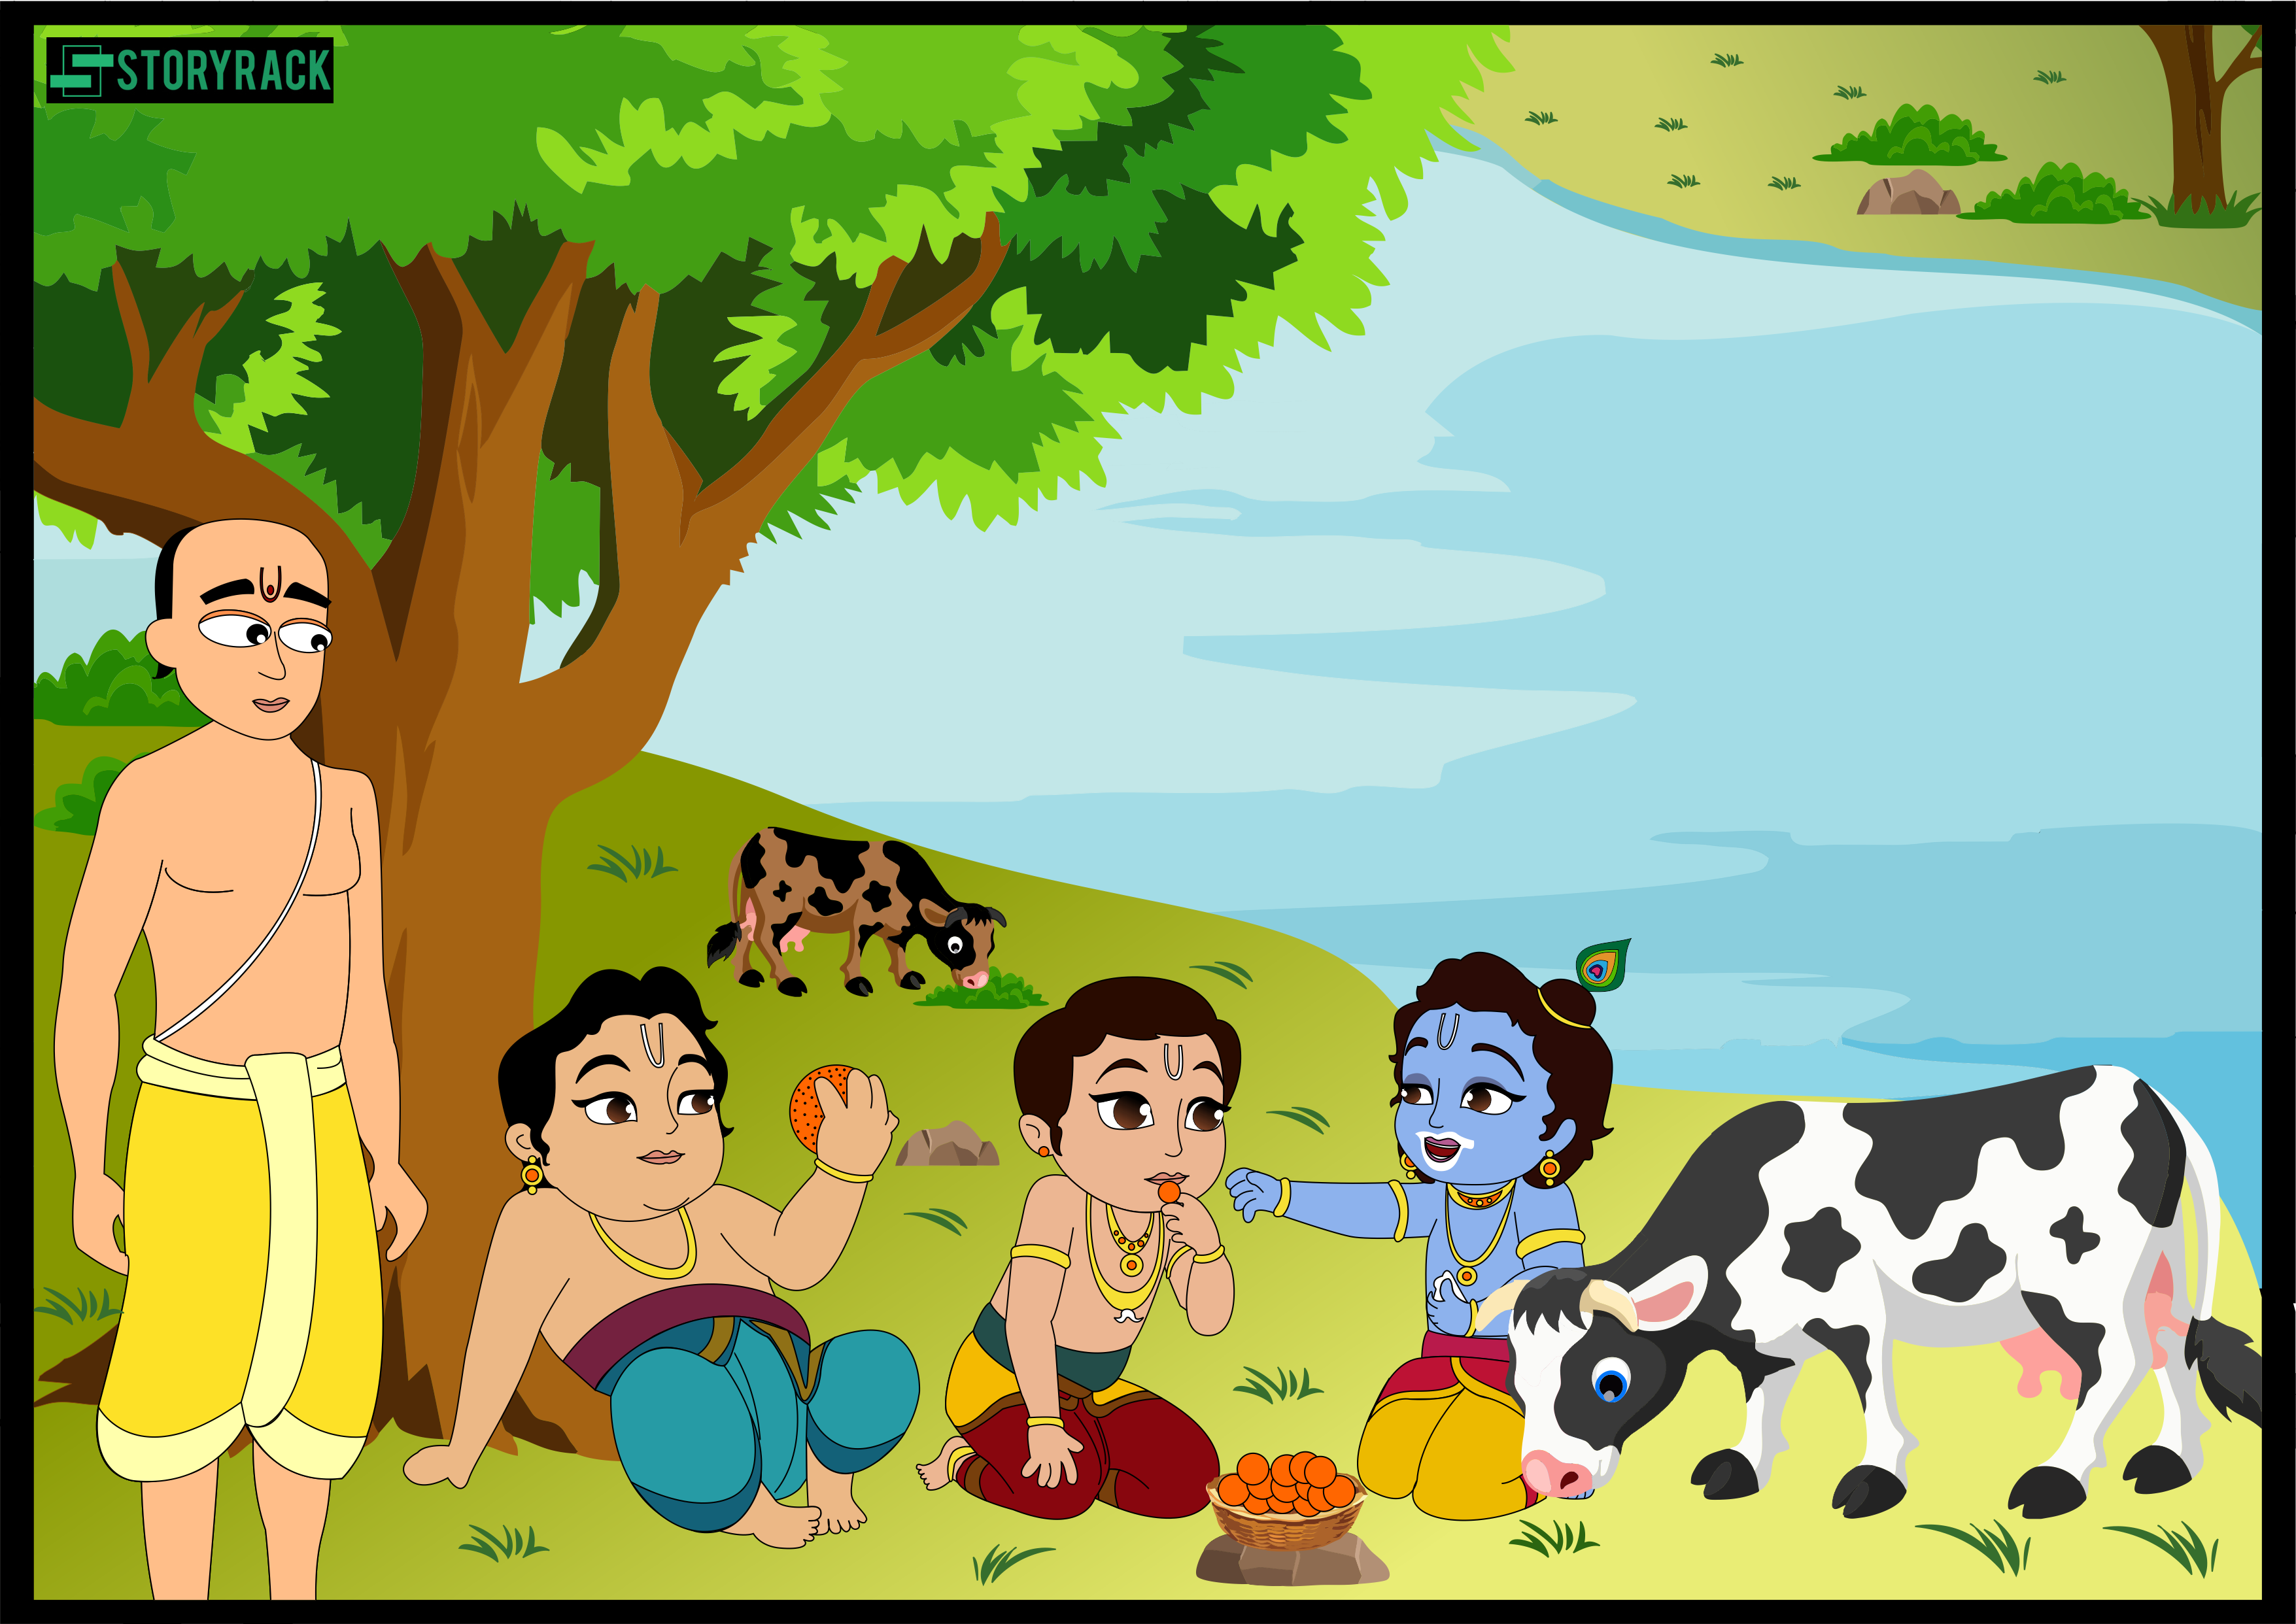 Krishna and his friends